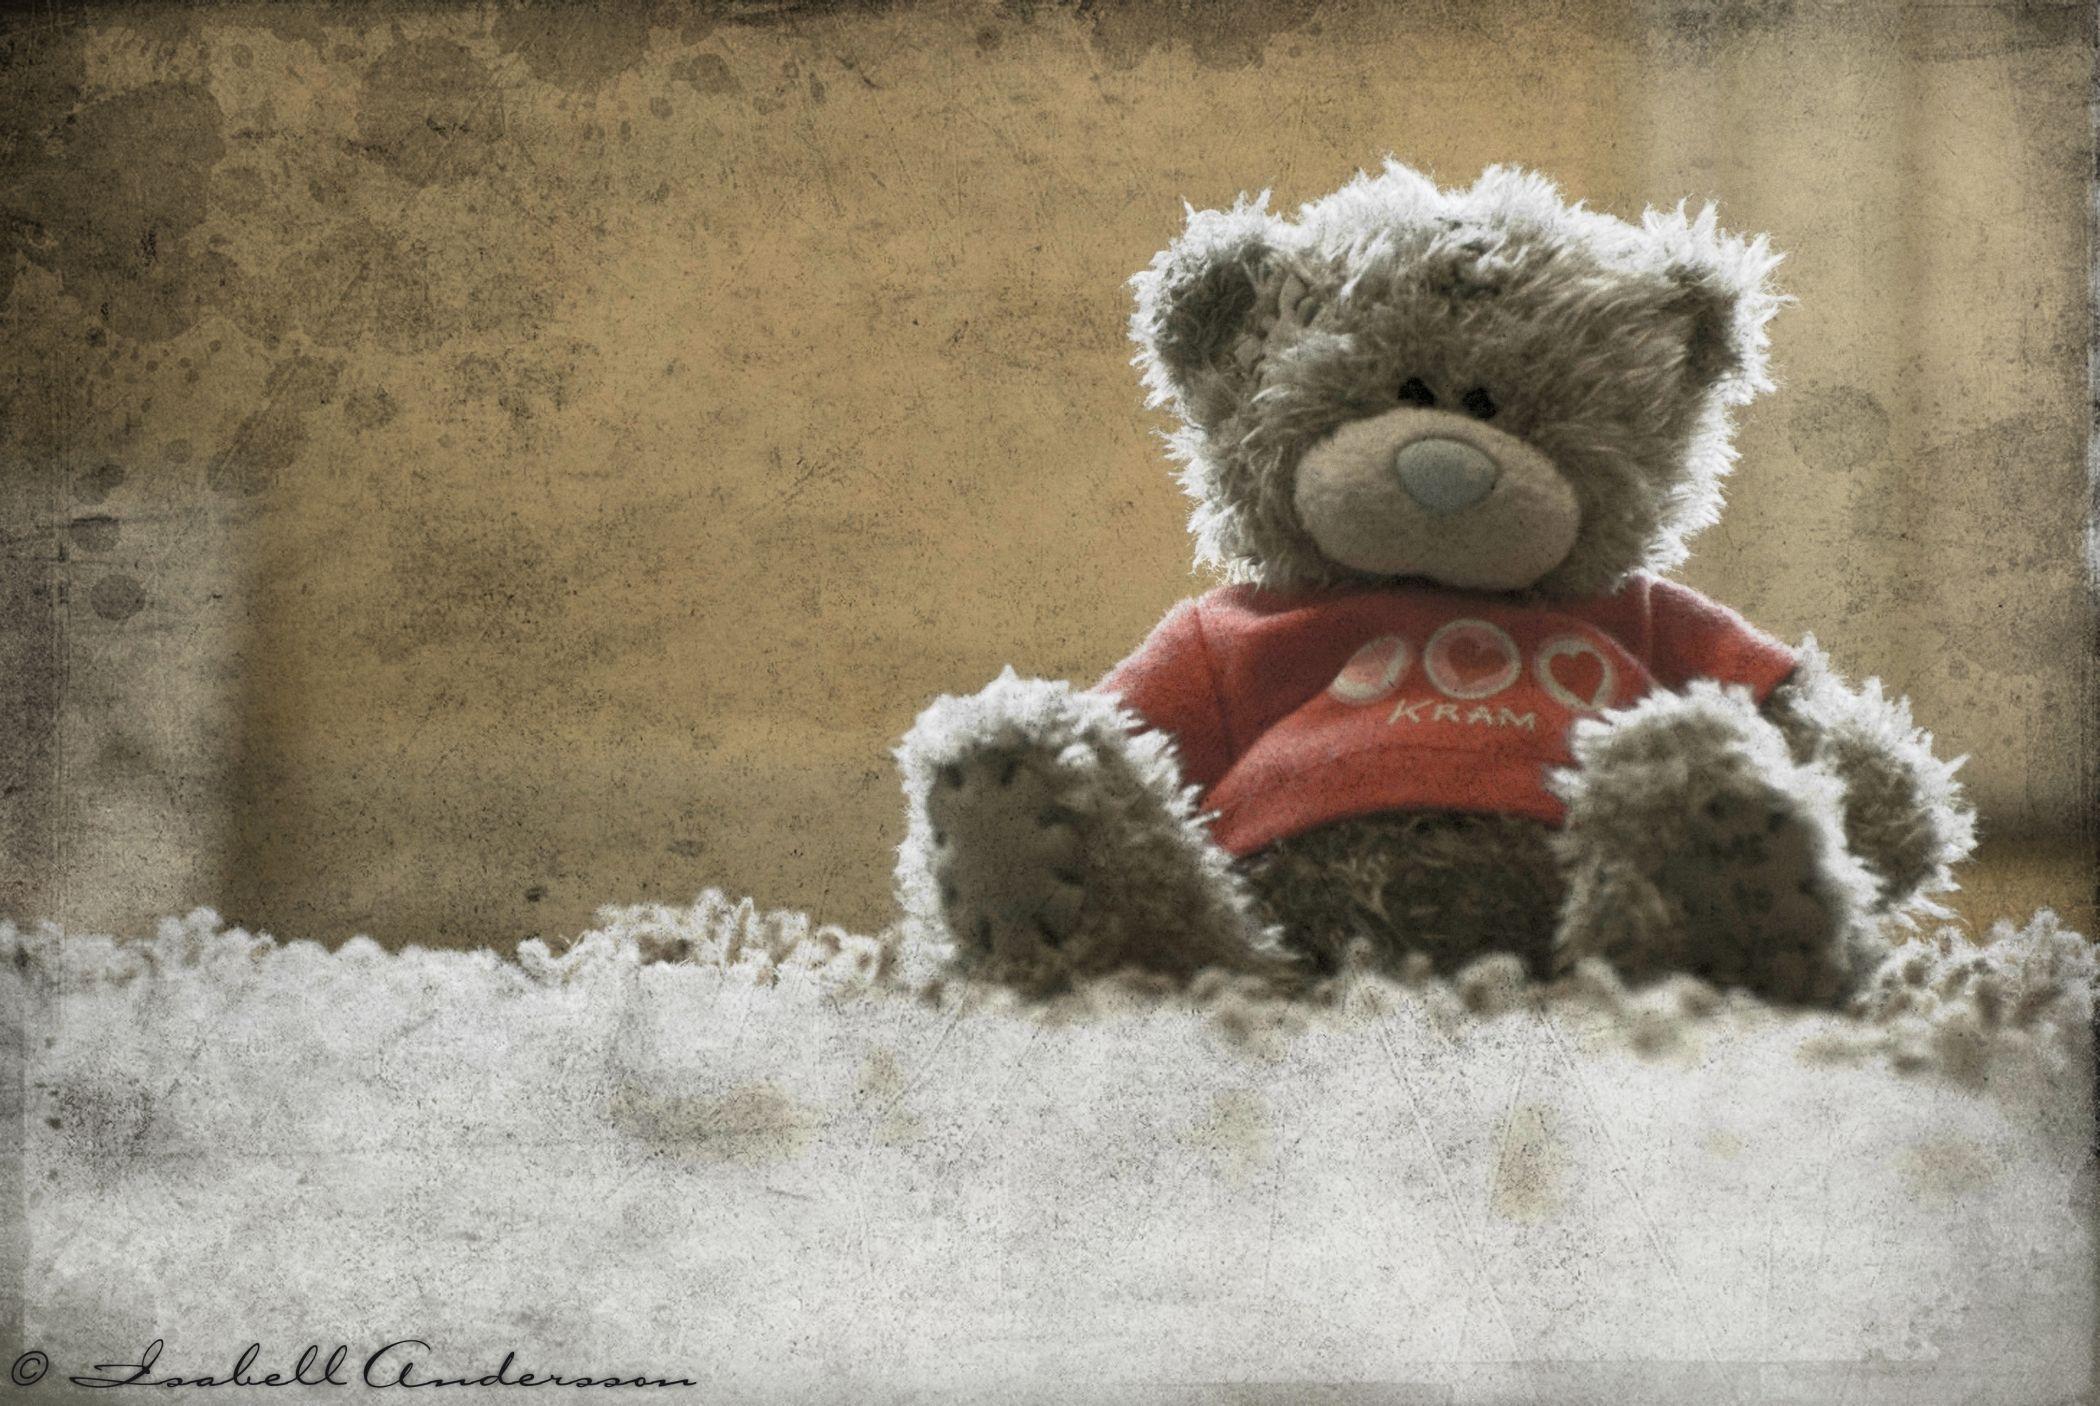 Love Teddy Bear HD Wallpaper Widescreen n4 2100x1406 px 1.97 MB